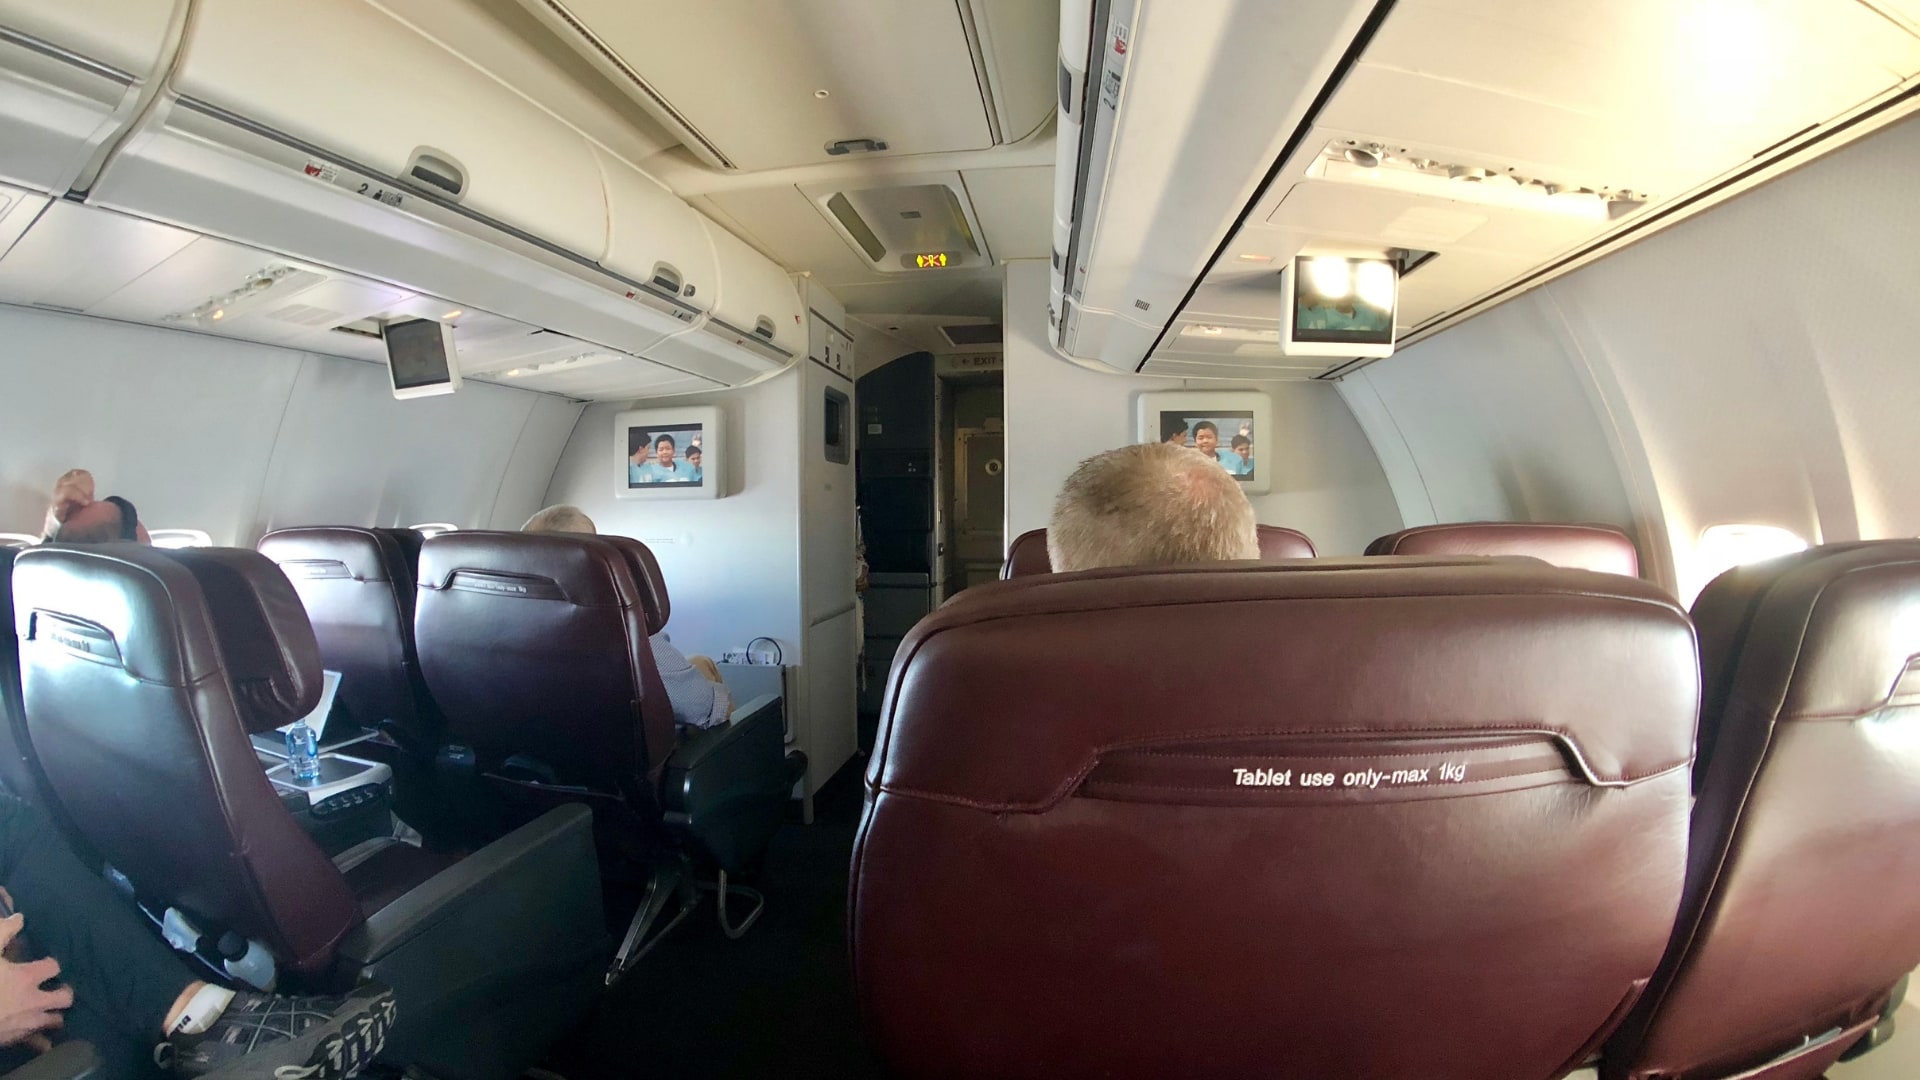 qantas domestic business class review cabin 737